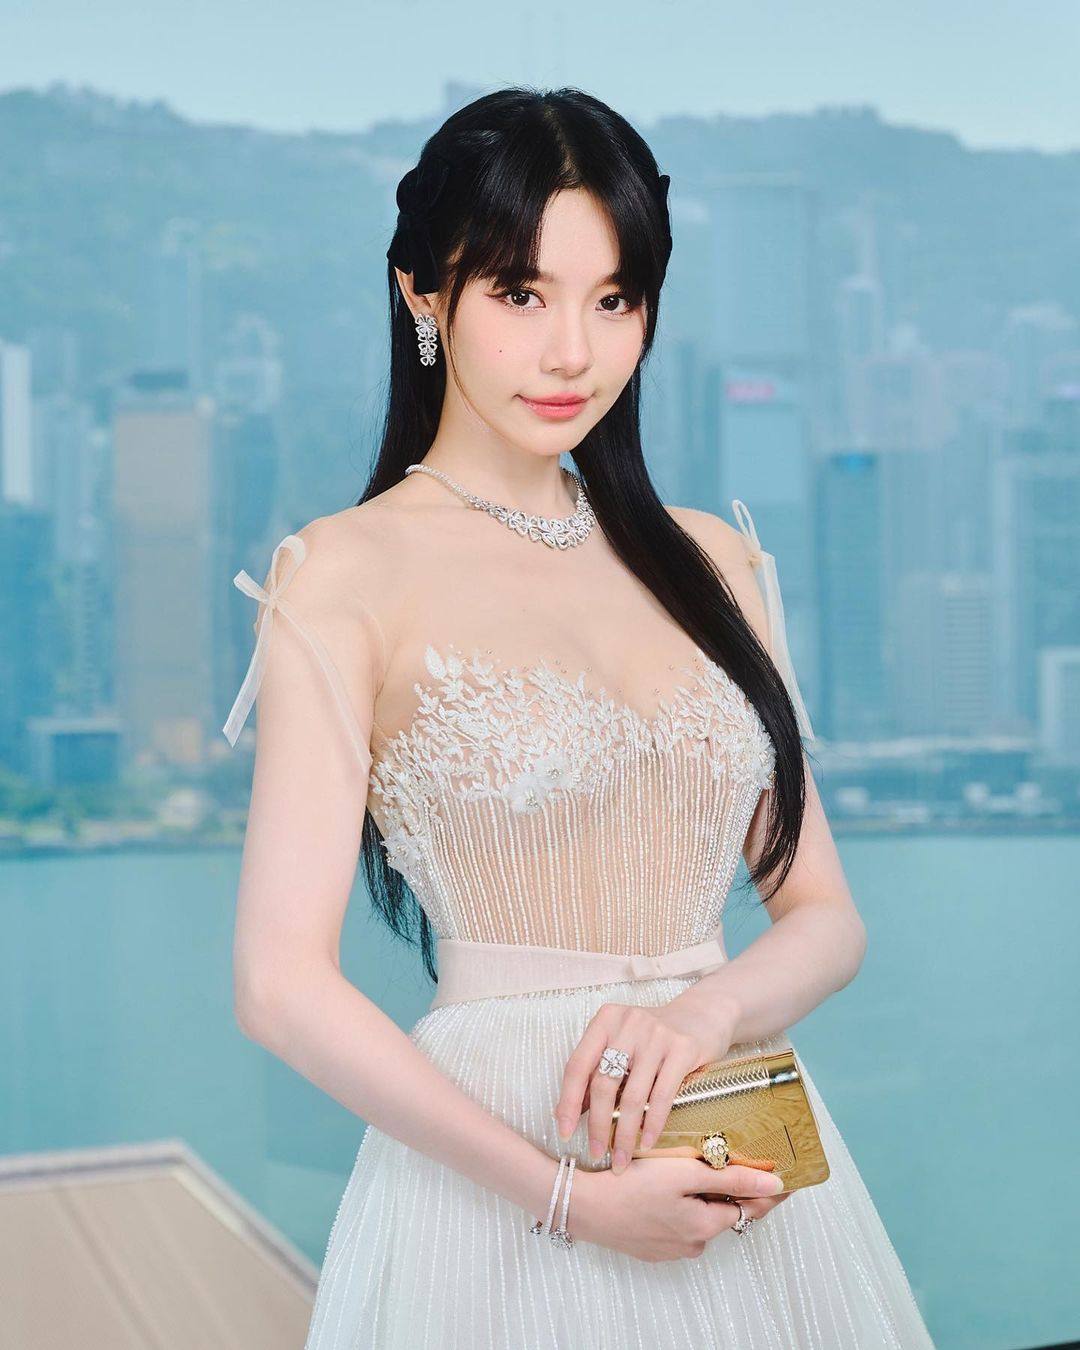 Hong Kong-based actress Lin Min-chen looks glamorous wearing Bulgari jewellery. Photo: @minchen333/Instagram